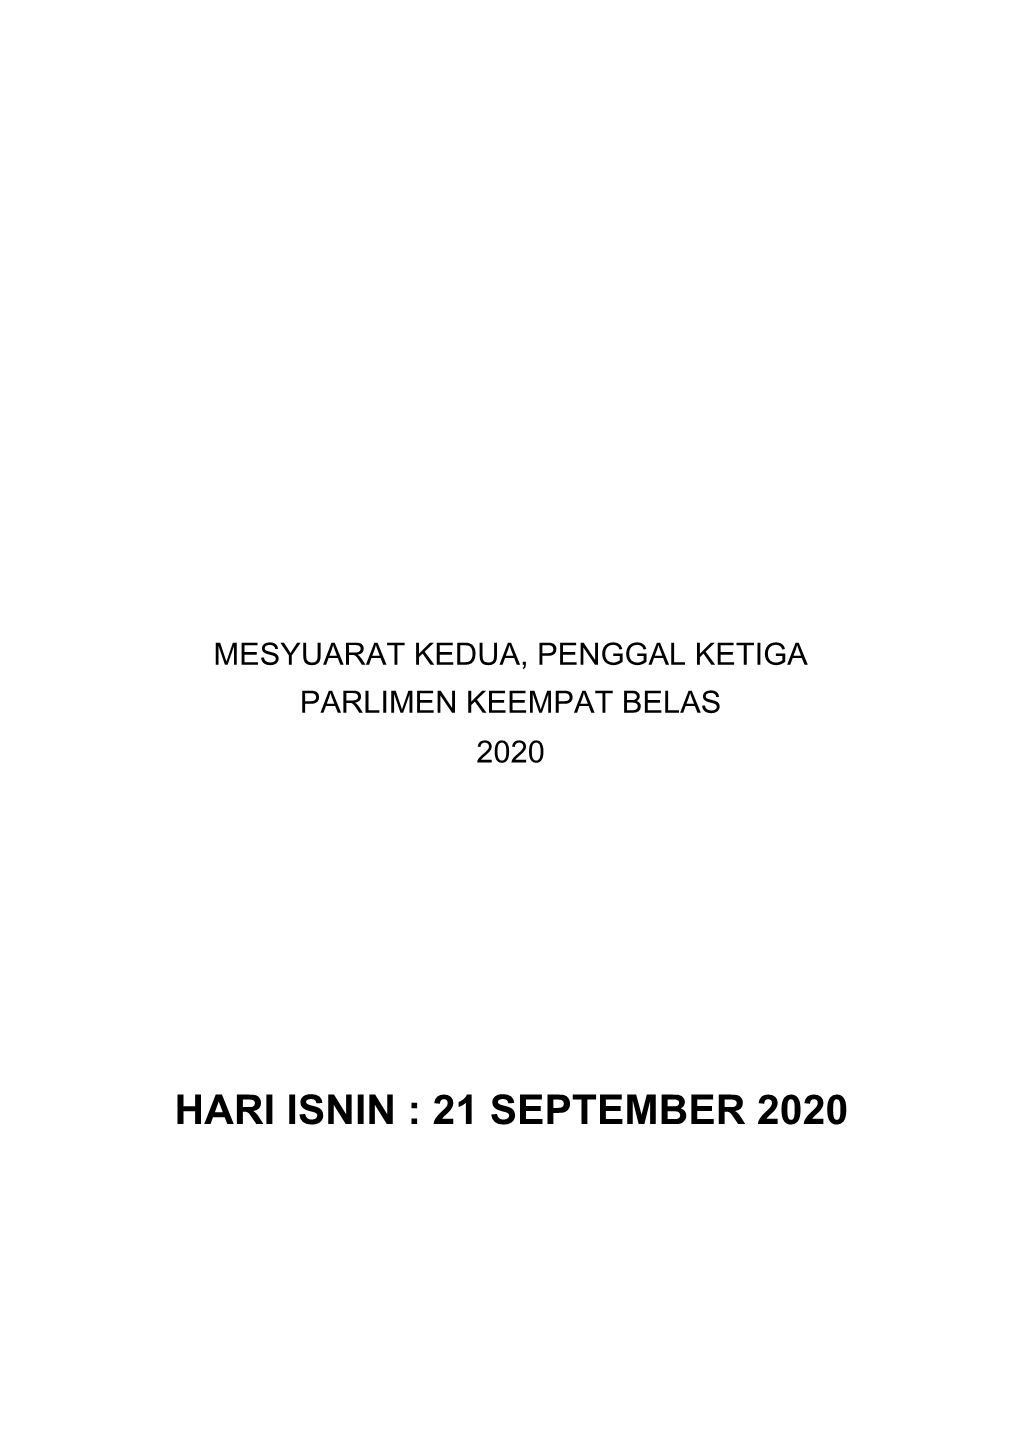 Hari Isnin : 21 September 2020 No Soalan: 1